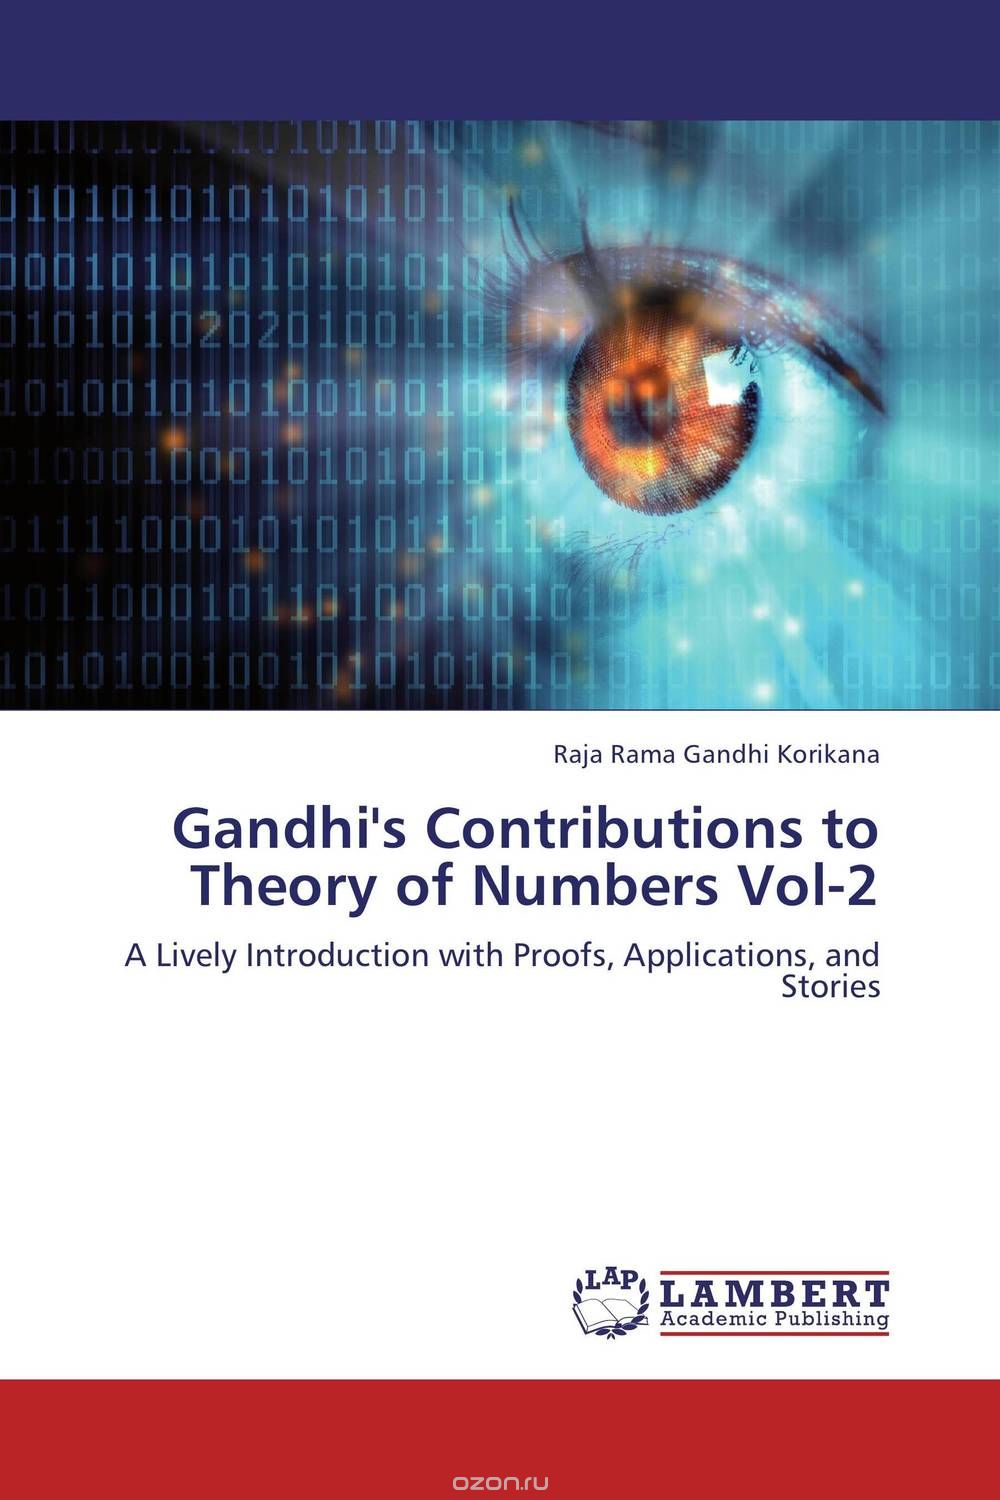 Скачать книгу "Gandhi's Contributions to Theory of Numbers Vol-2"